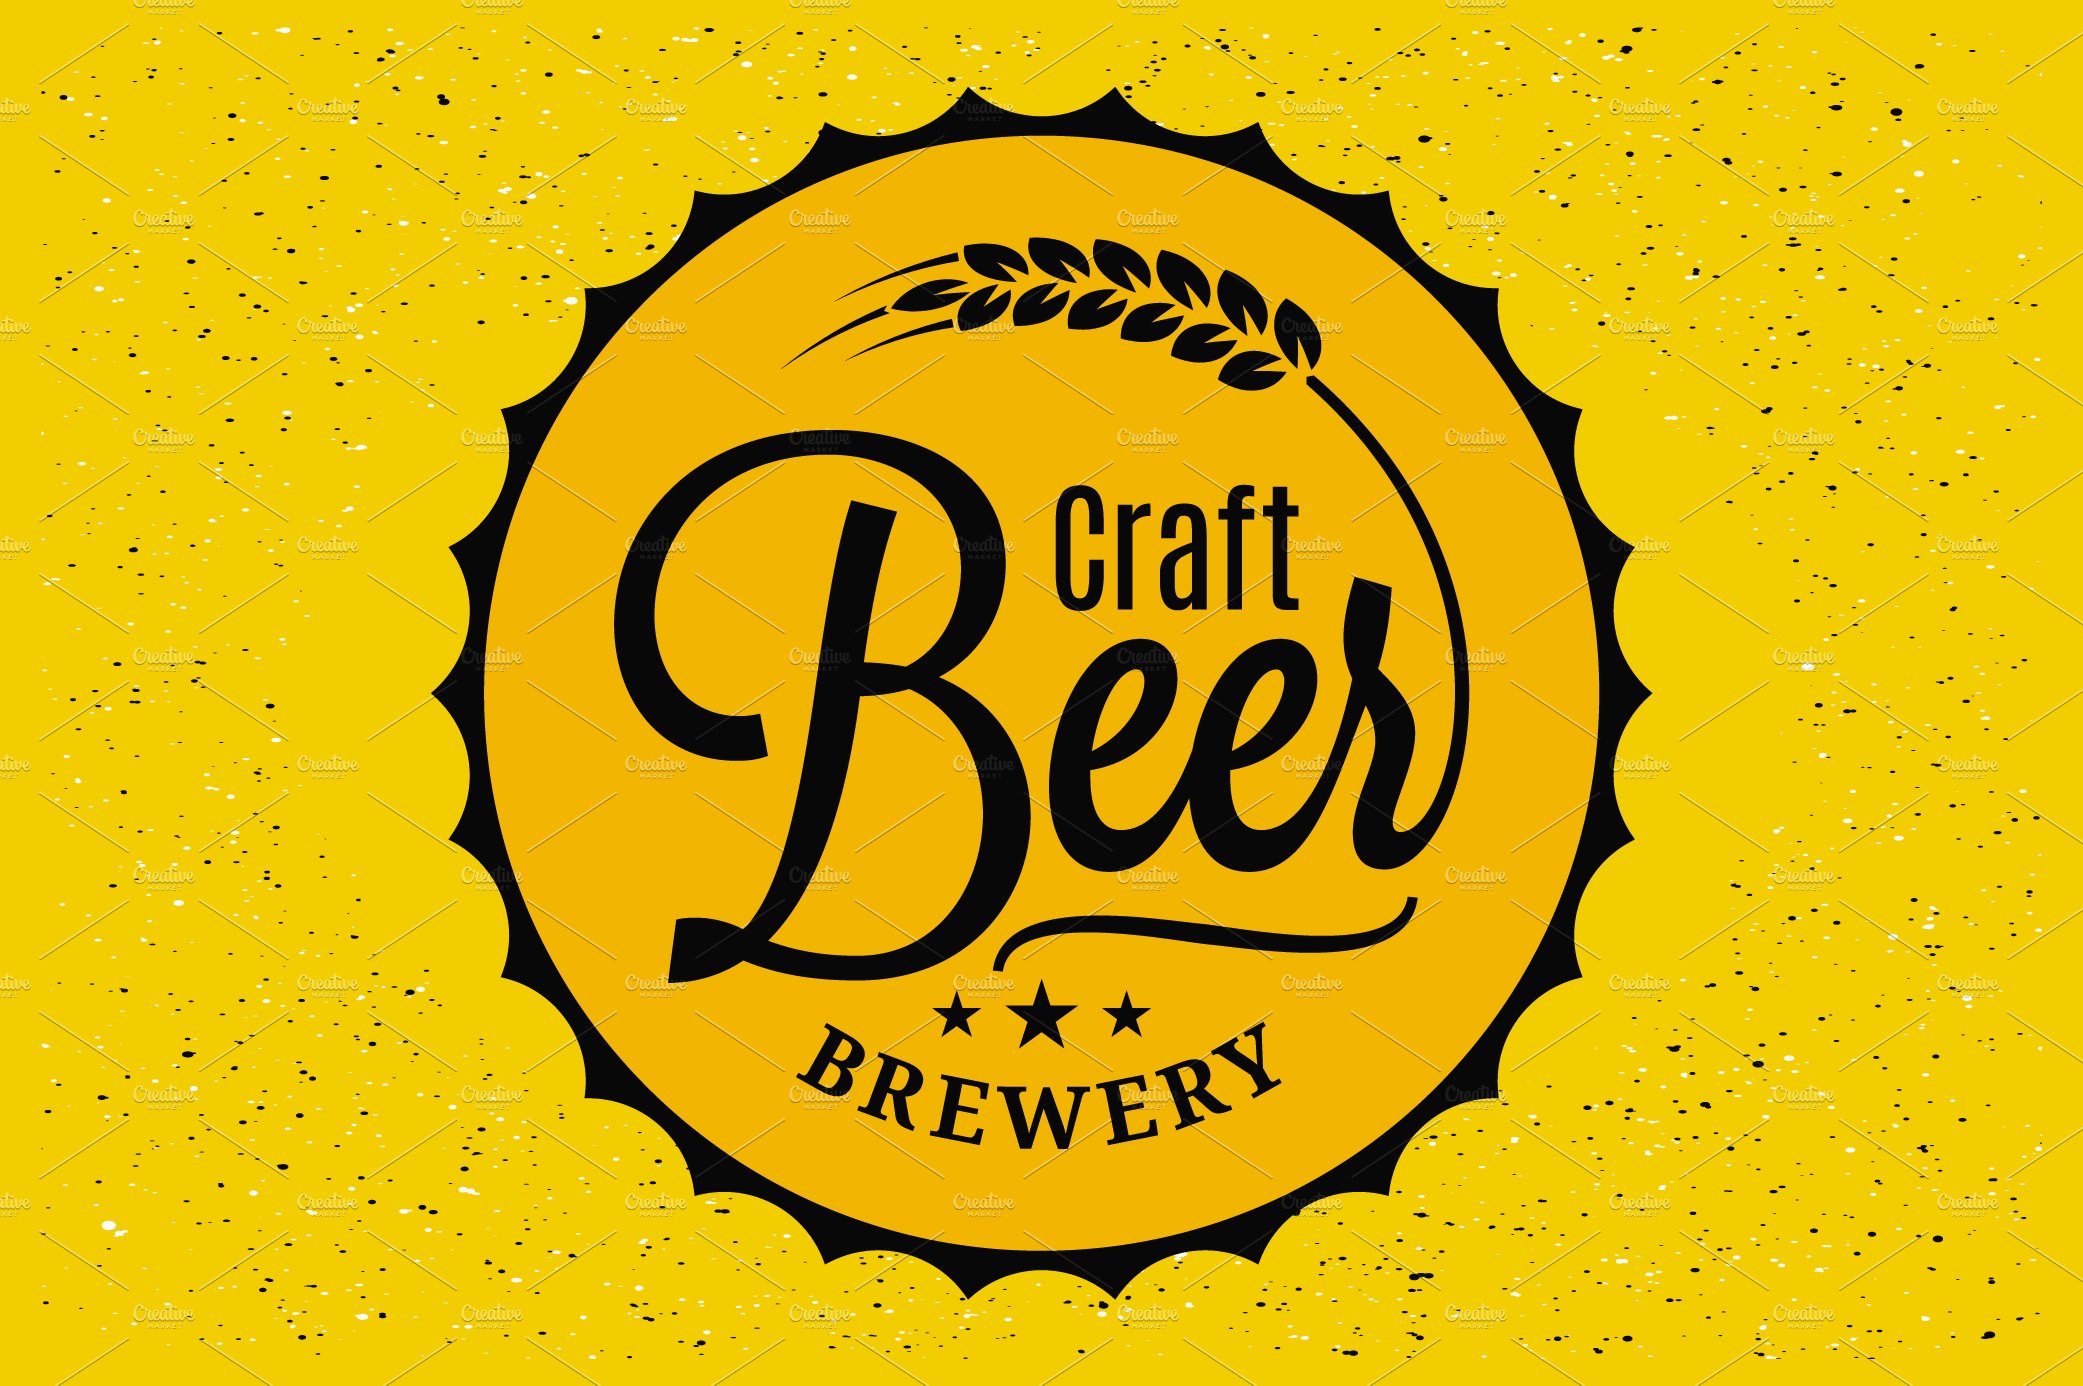 Beer cap brewery logo. Craft beer. cover image.